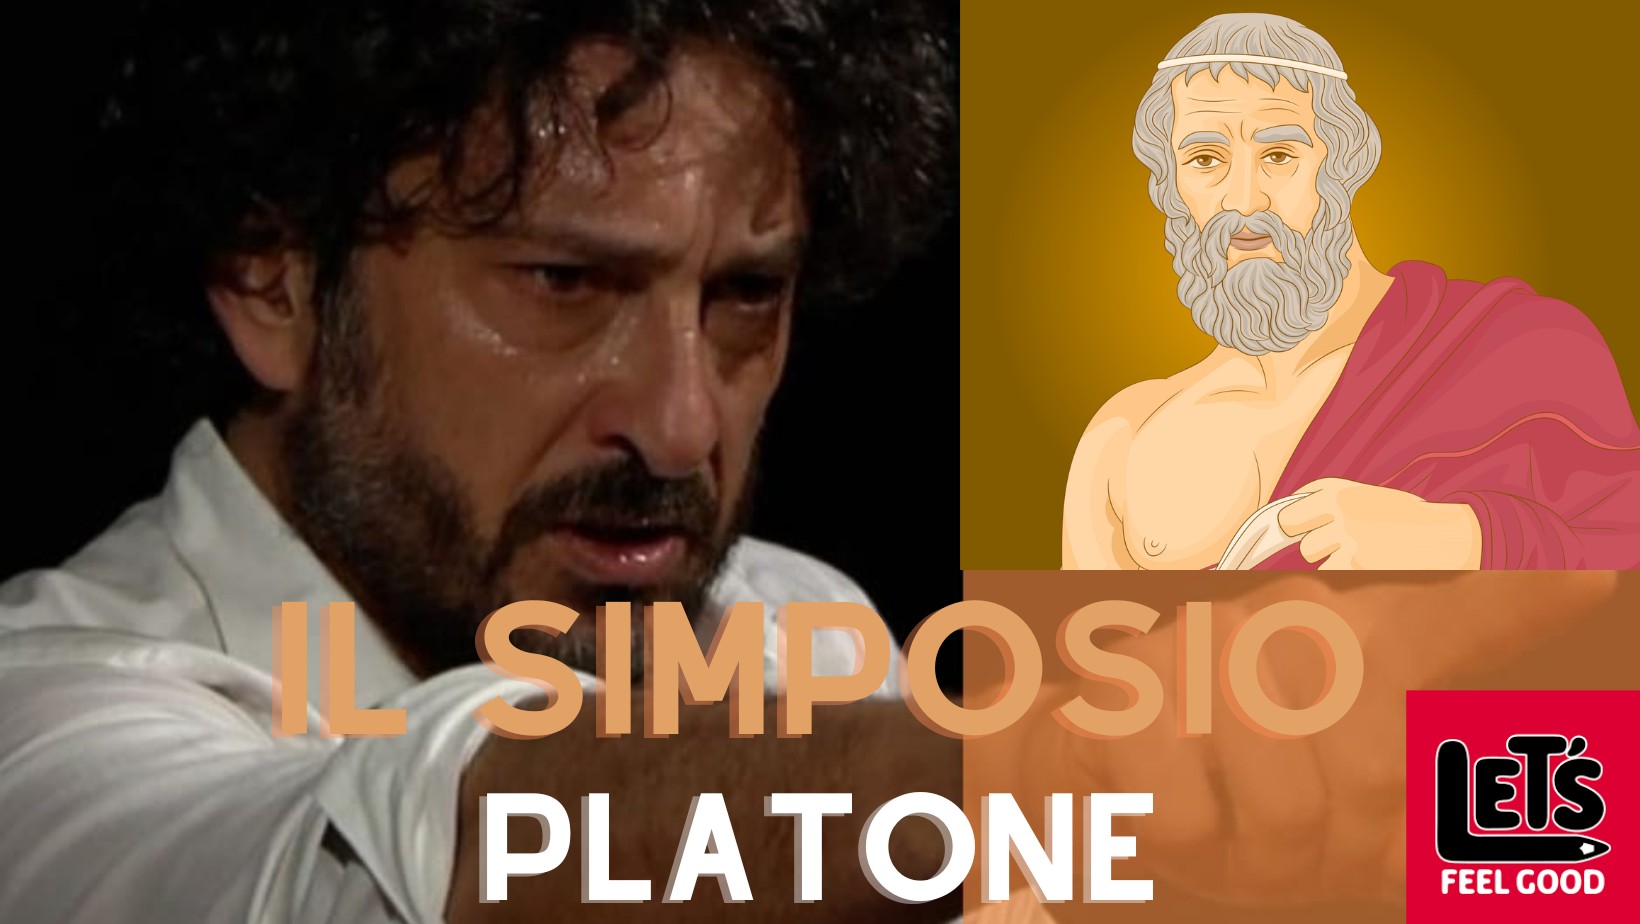 Il Simposio: Platone e l'Amore. Ieri, oggi. - Let's Feel Good